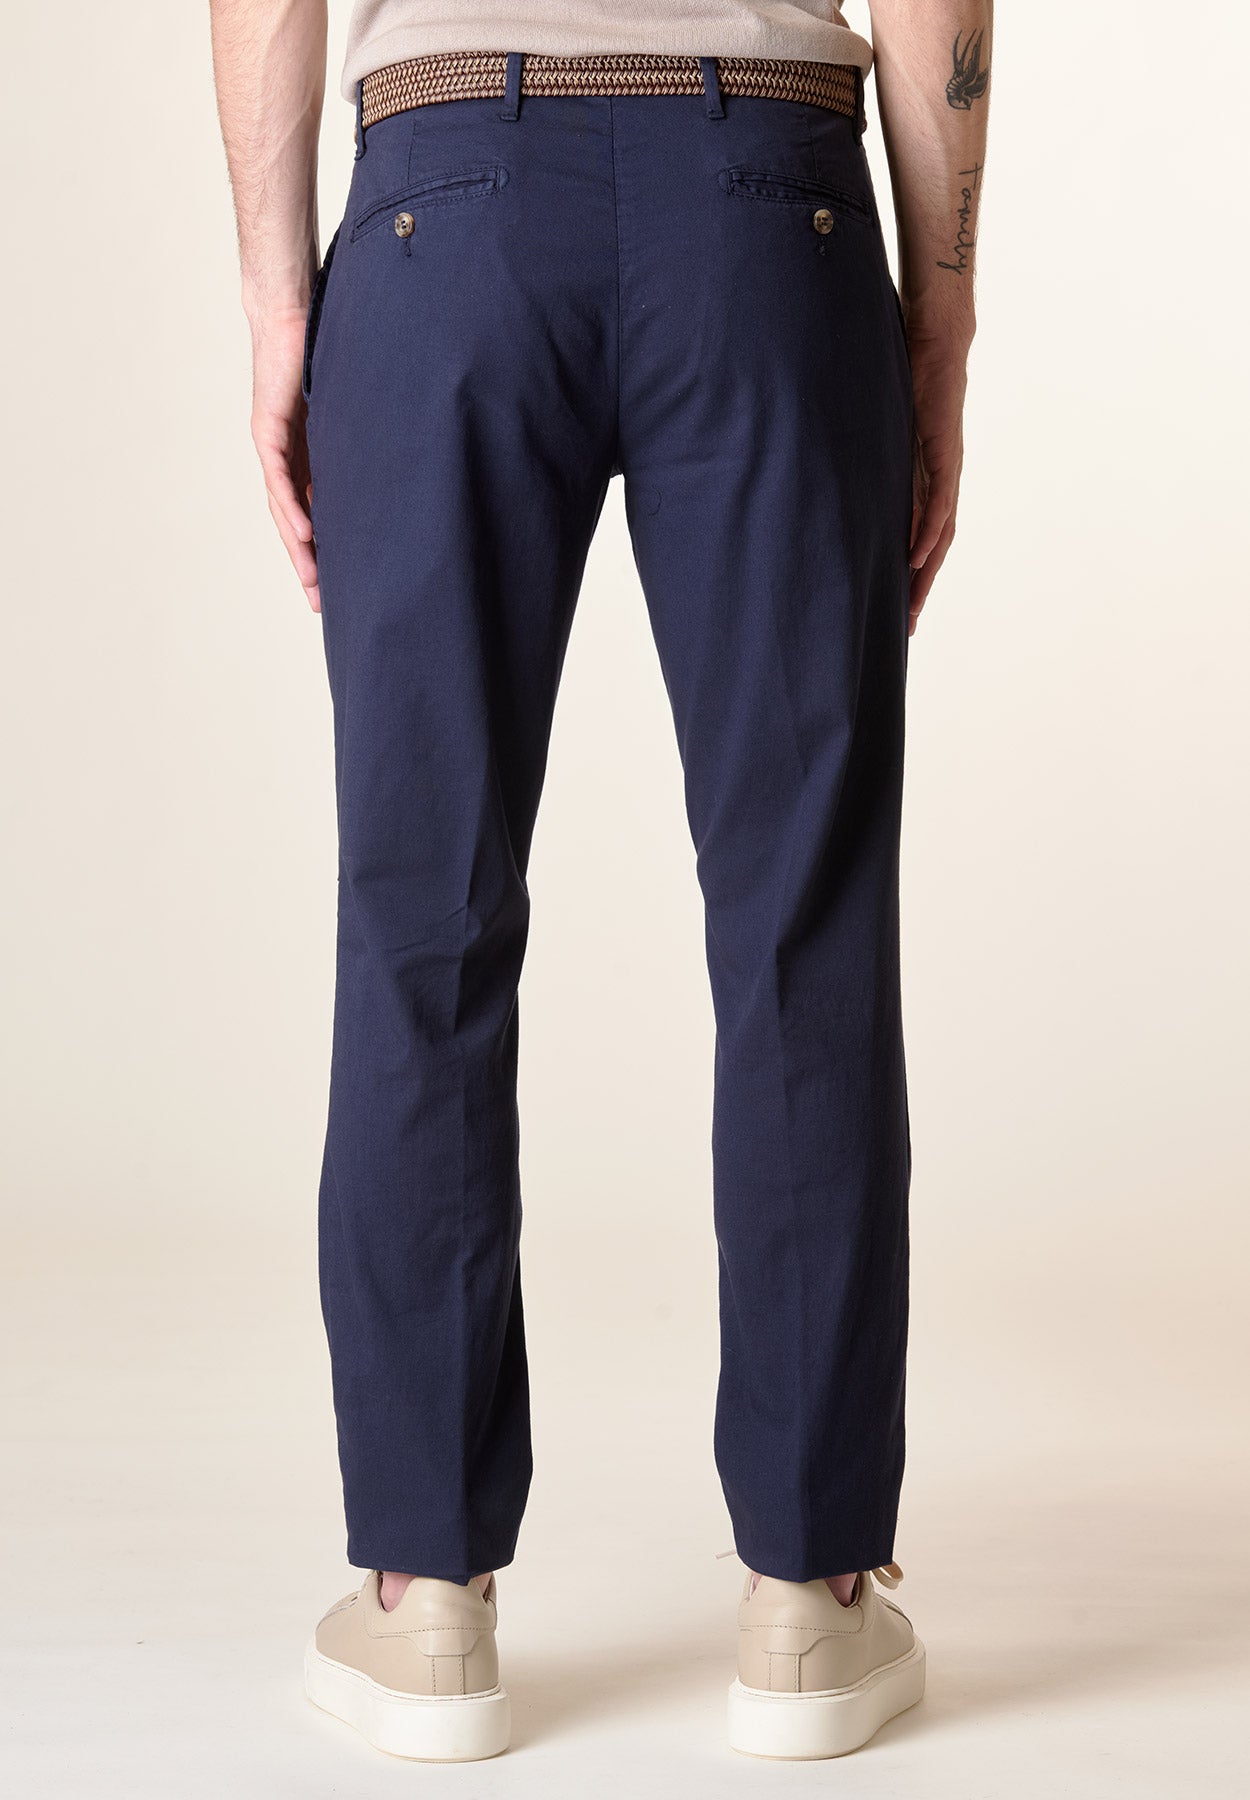 Blue regular fit lightweight stretch cotton pant